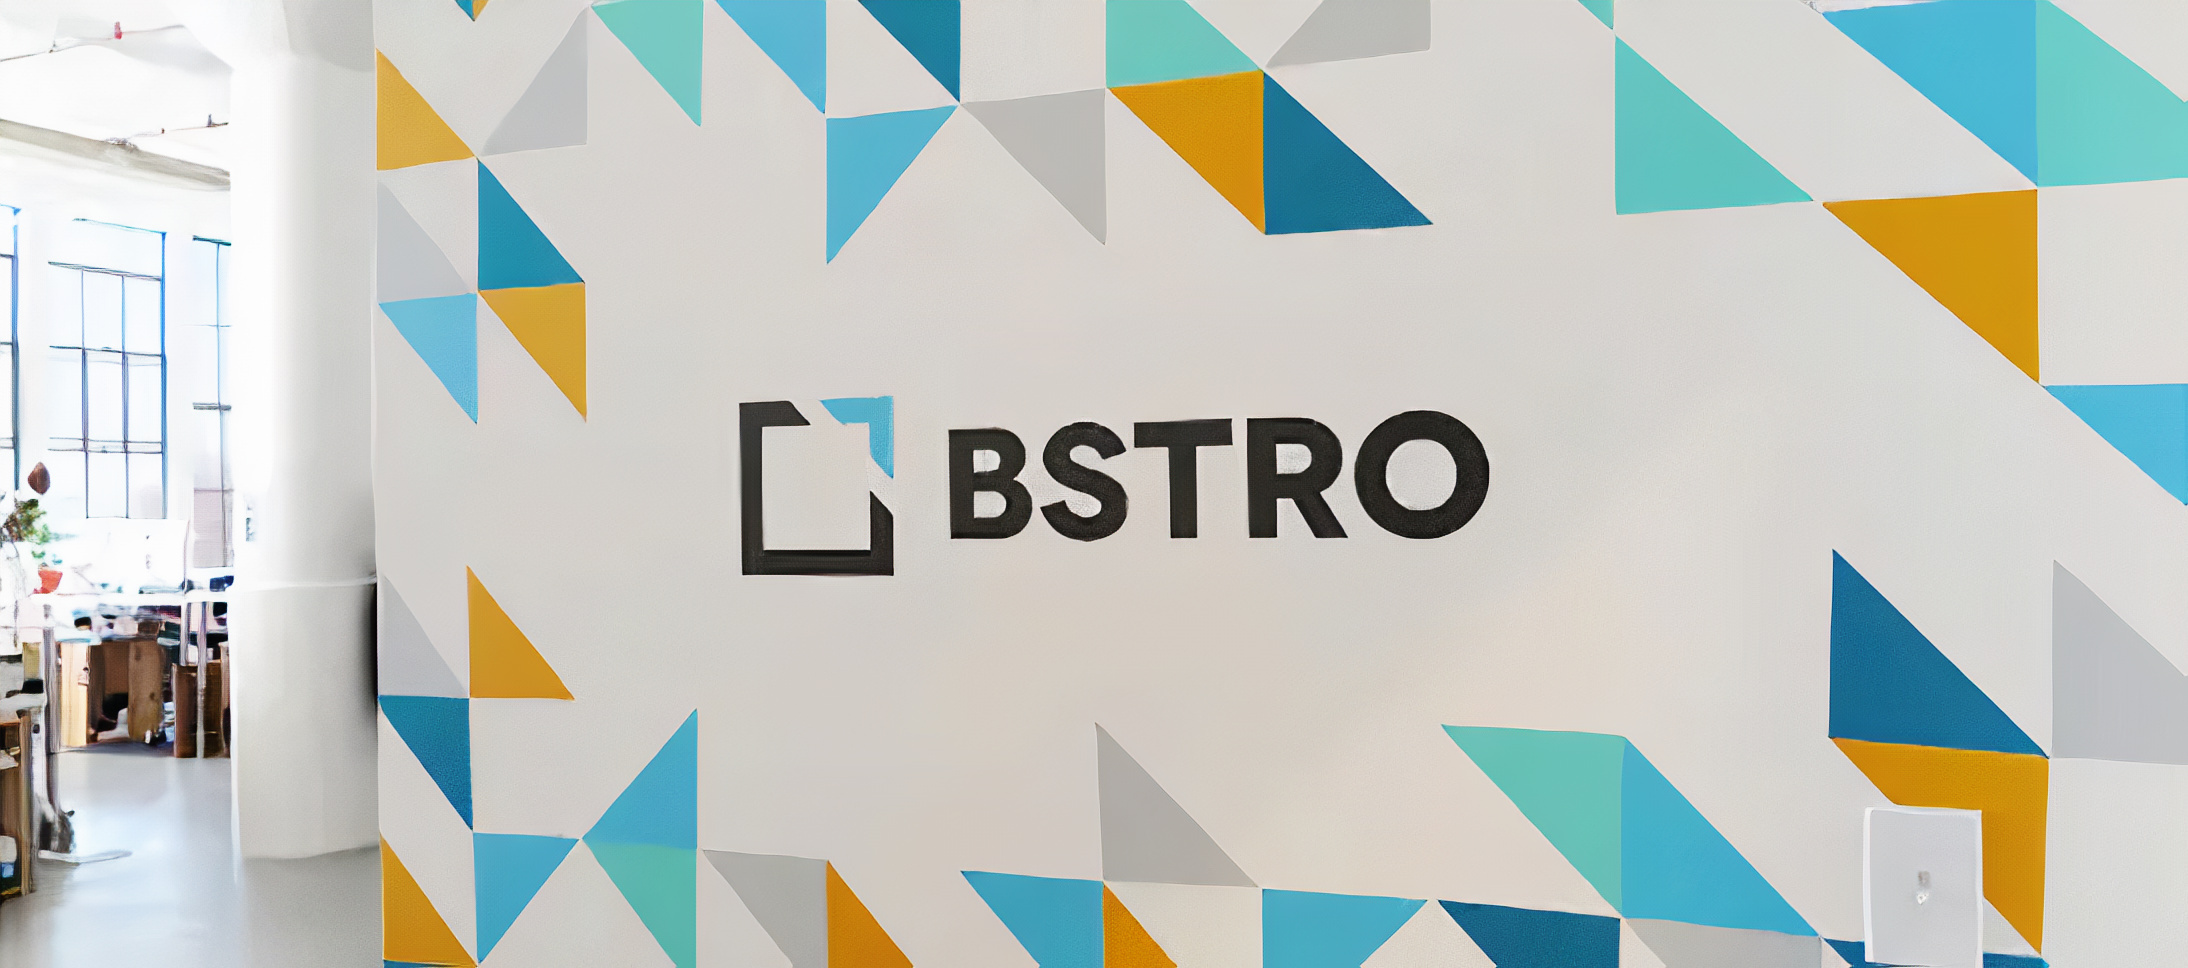 BSTRO 2015: Our bigger, bolder new brand